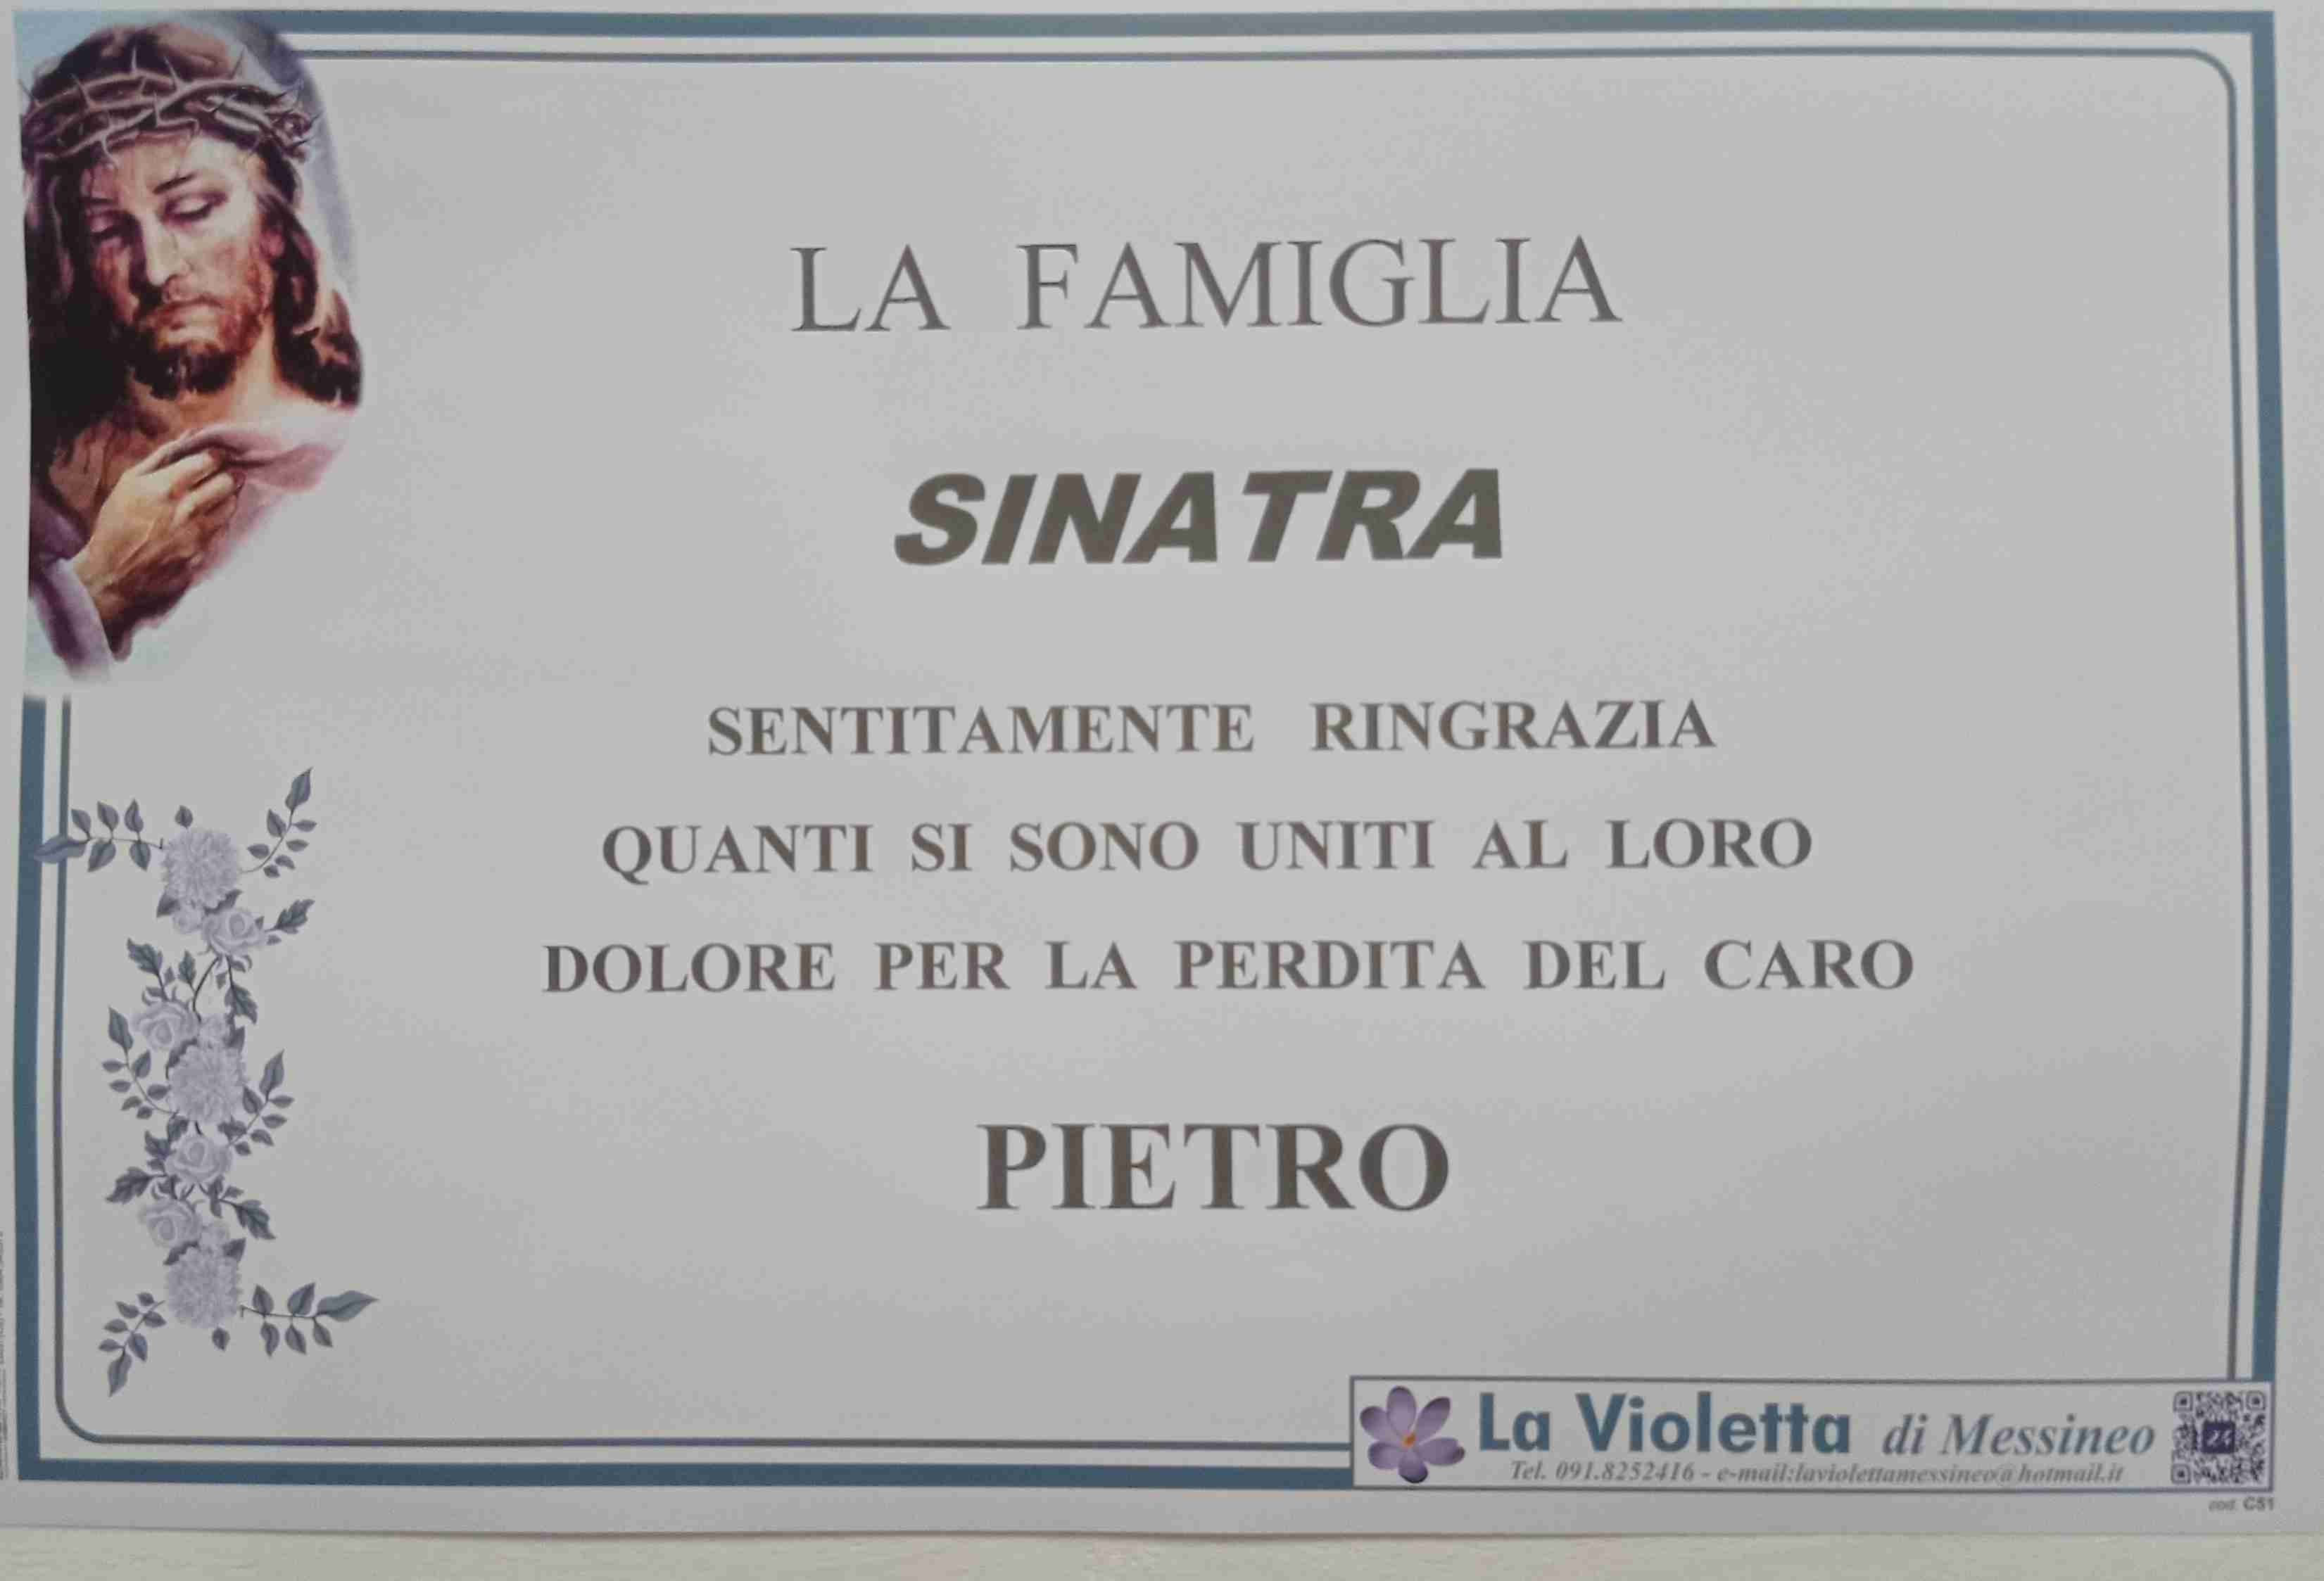 Pietro Sinatra